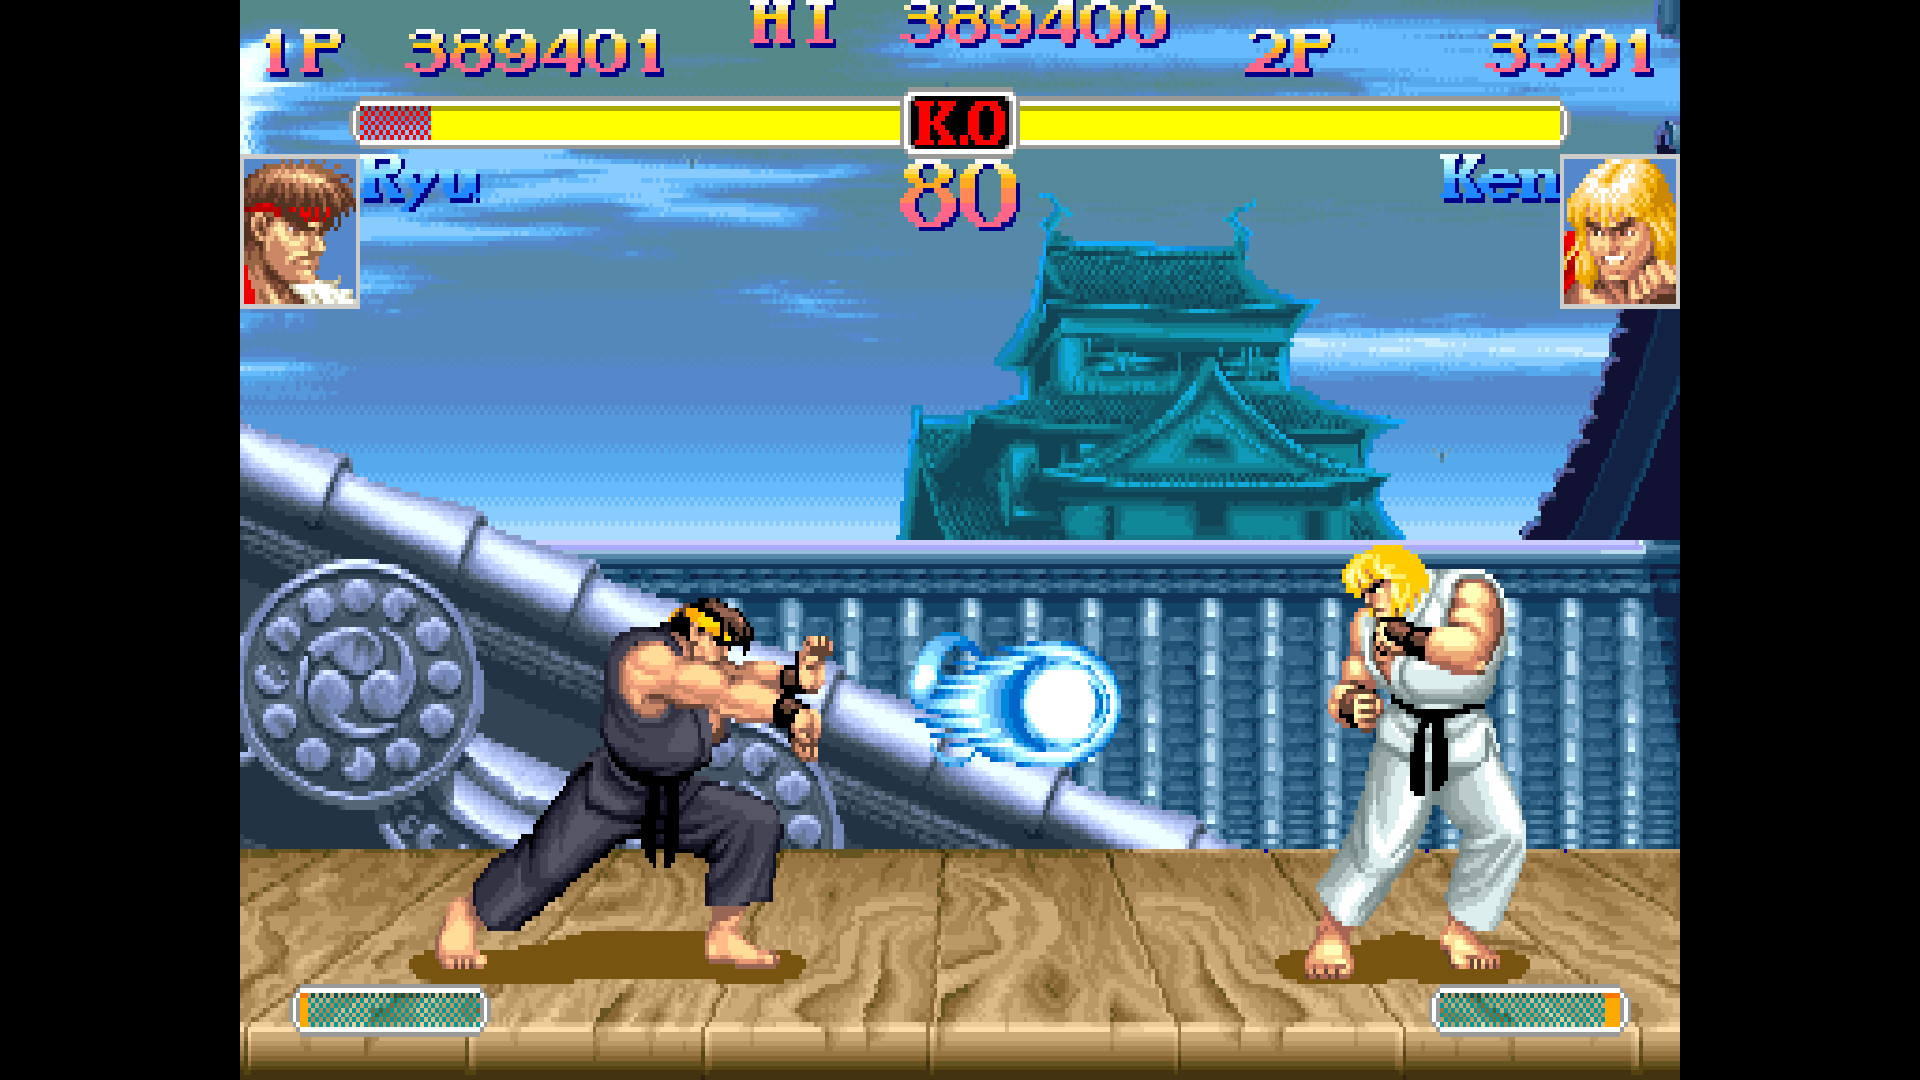 Capcom Arcade Stadium：STREET FIGHTER II' - Hyper Fighting - on Steam